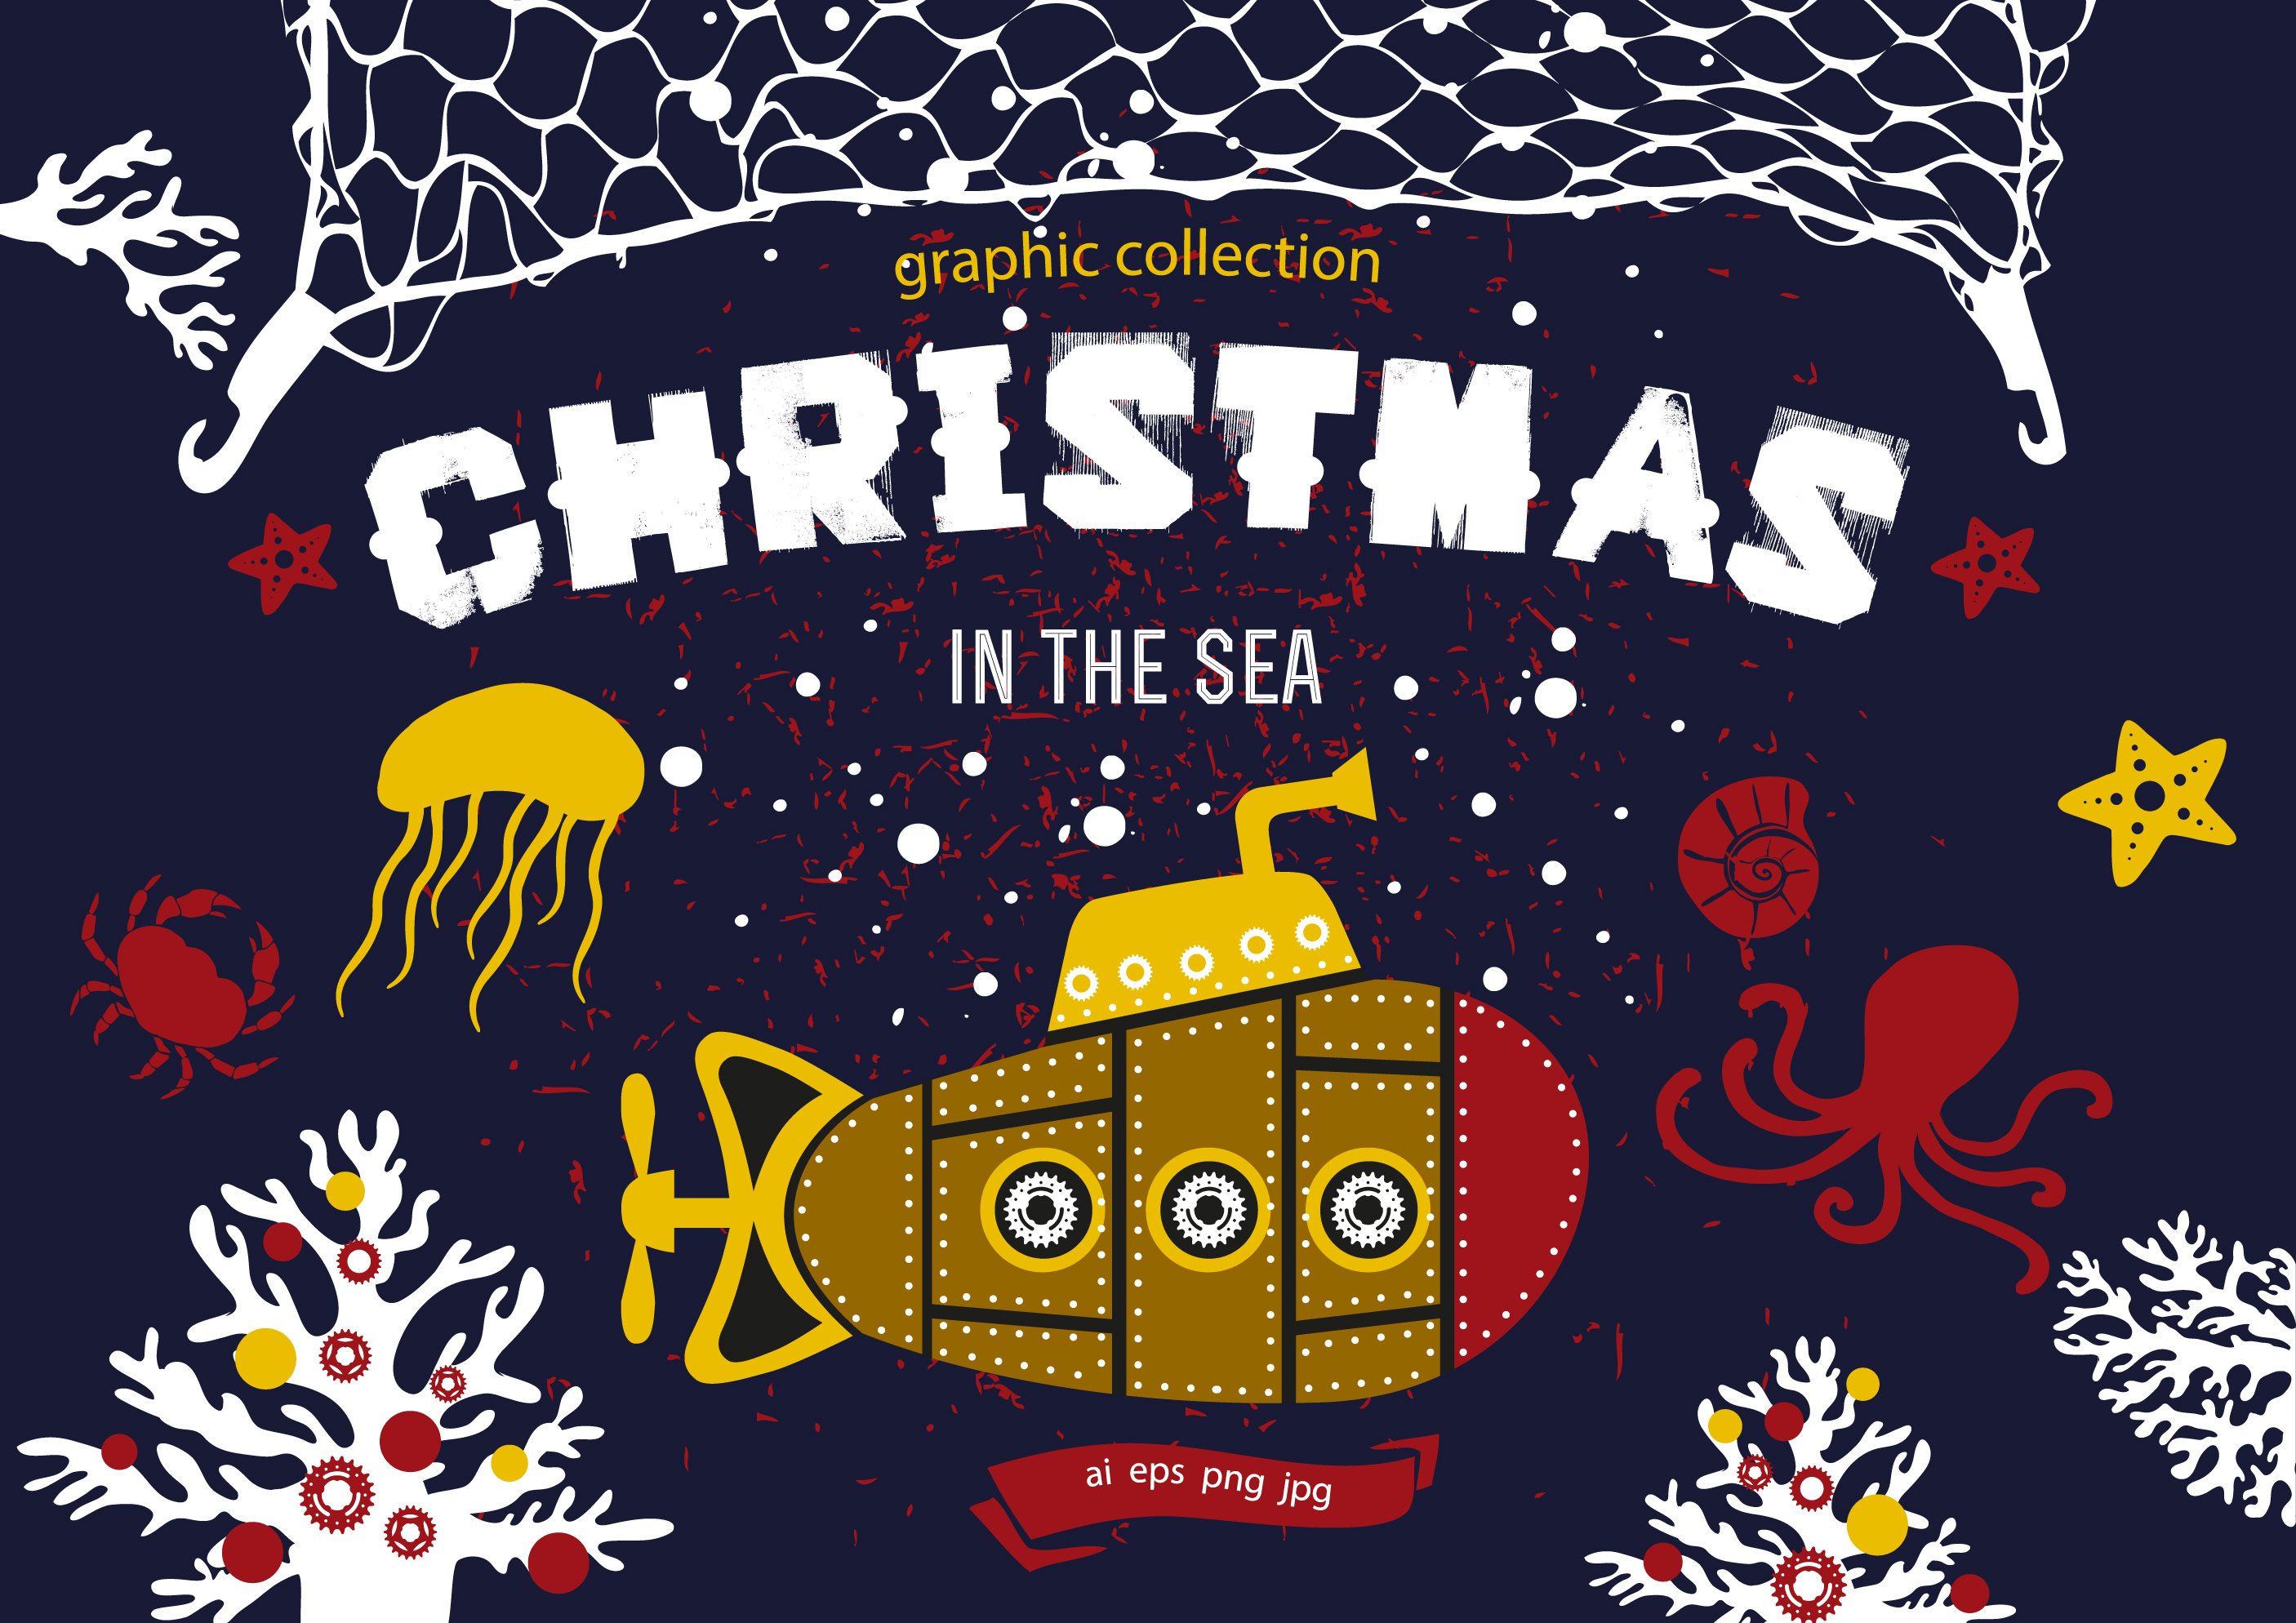 Christmas at Sea cover image.